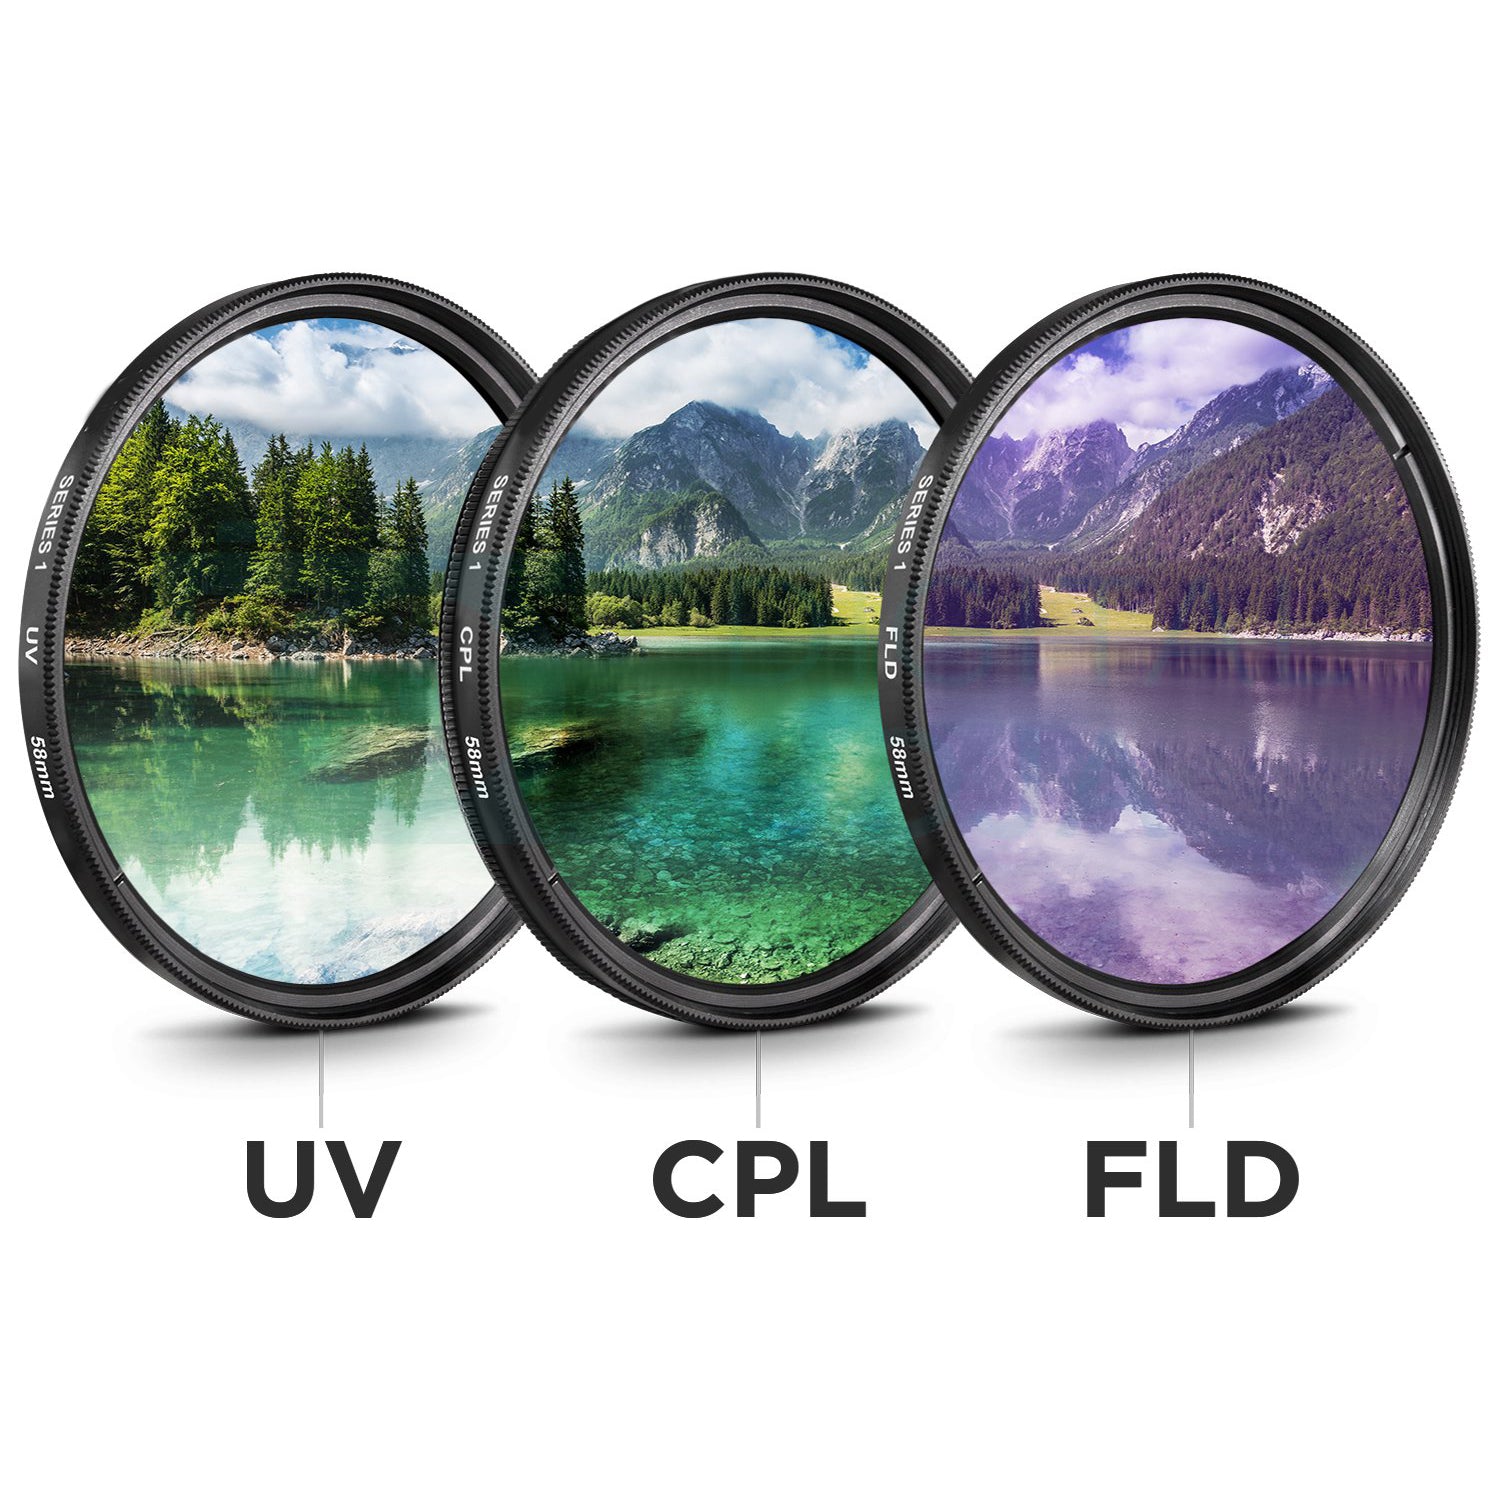 Canon EF 50mm f/1.8 STM Lens (0570C002) Lens with Bundle  includes 3pc Filter Kit  + Lens Pouch + More